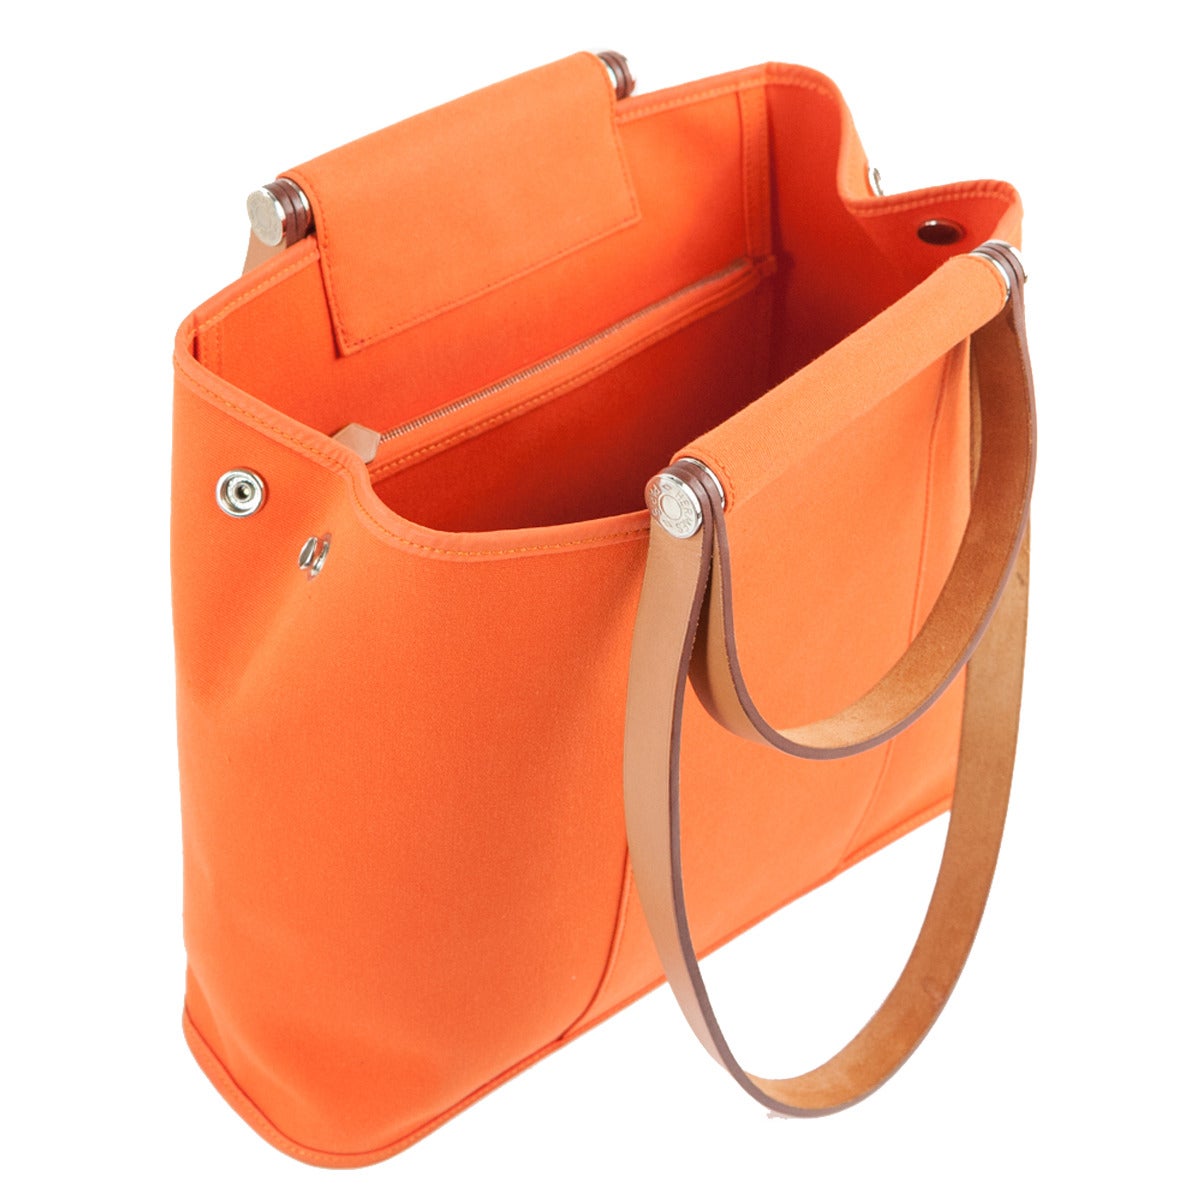 Hermès Orange Textile and Leather Handbag at 1stdibs